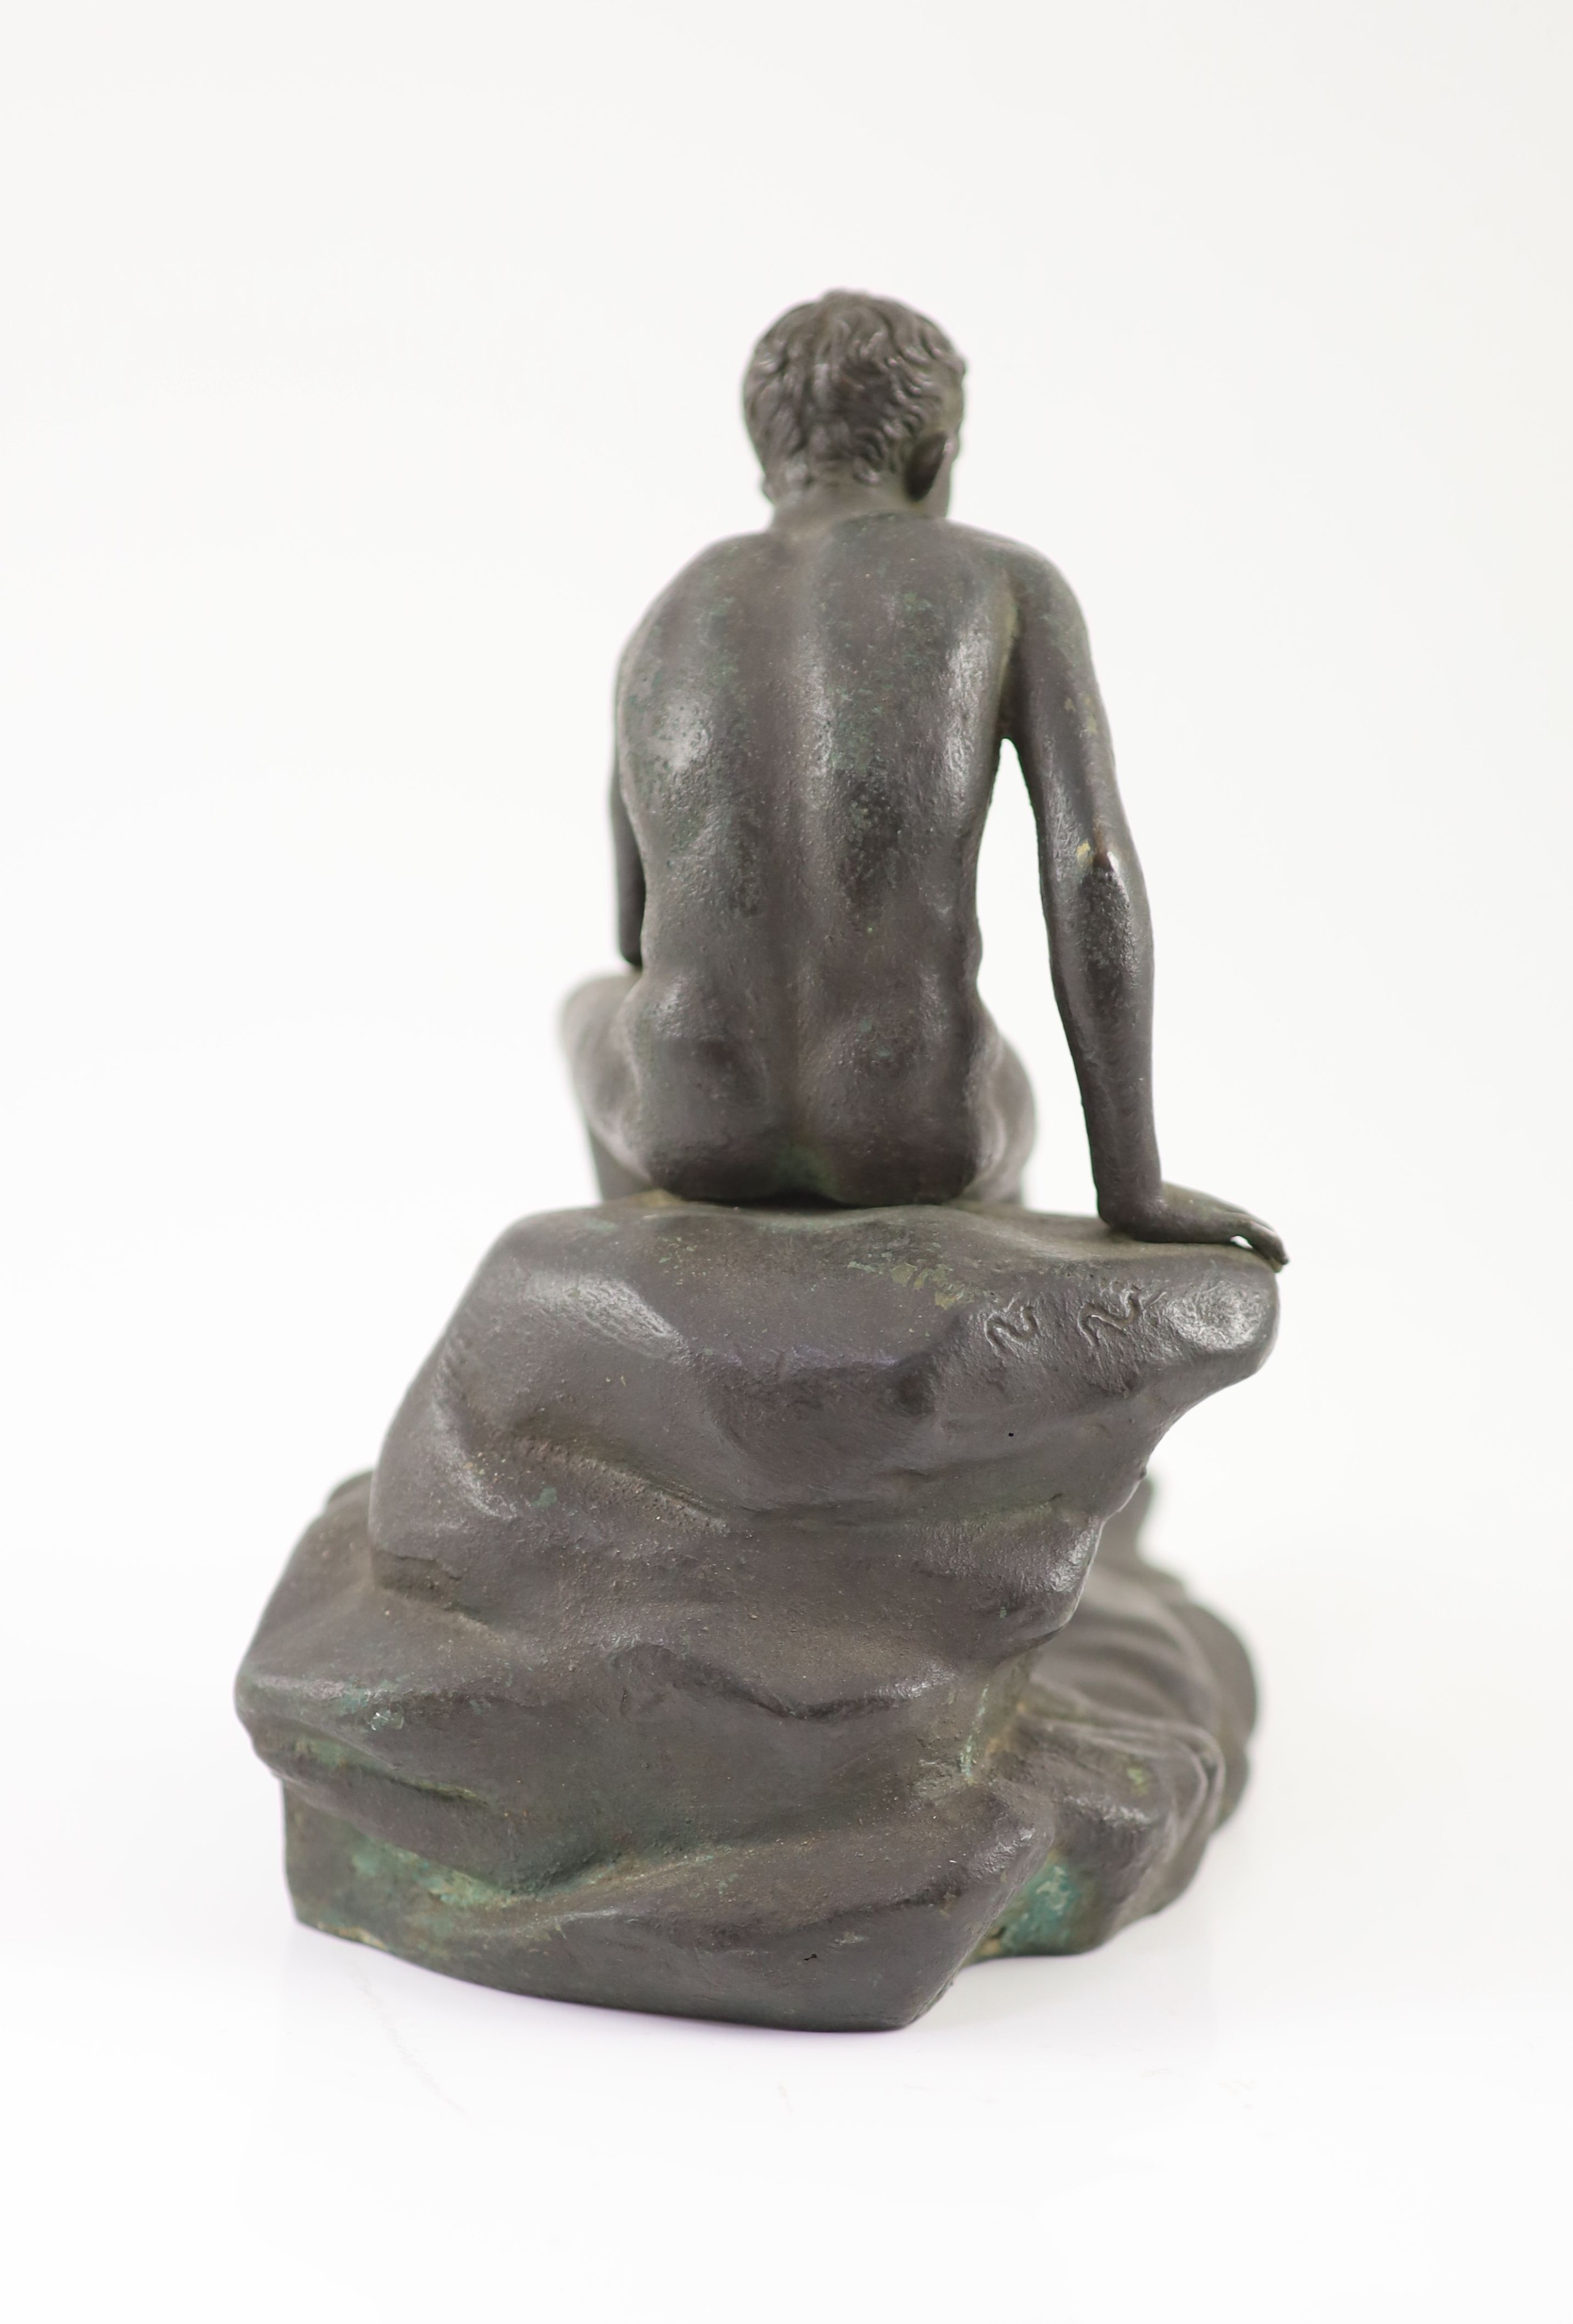 After the Antique, a Grand Tour bronze figure of Hermes H 19cm. W 19cm.